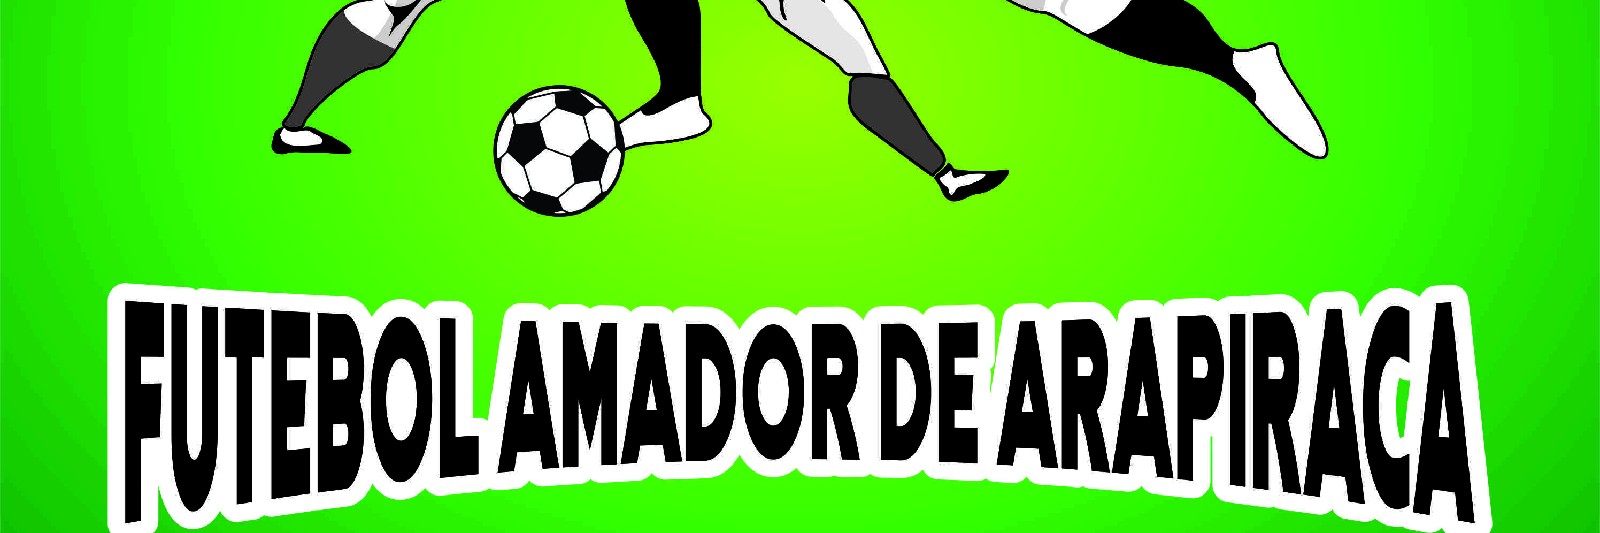 Futebol Amador De Arapiraca 2019